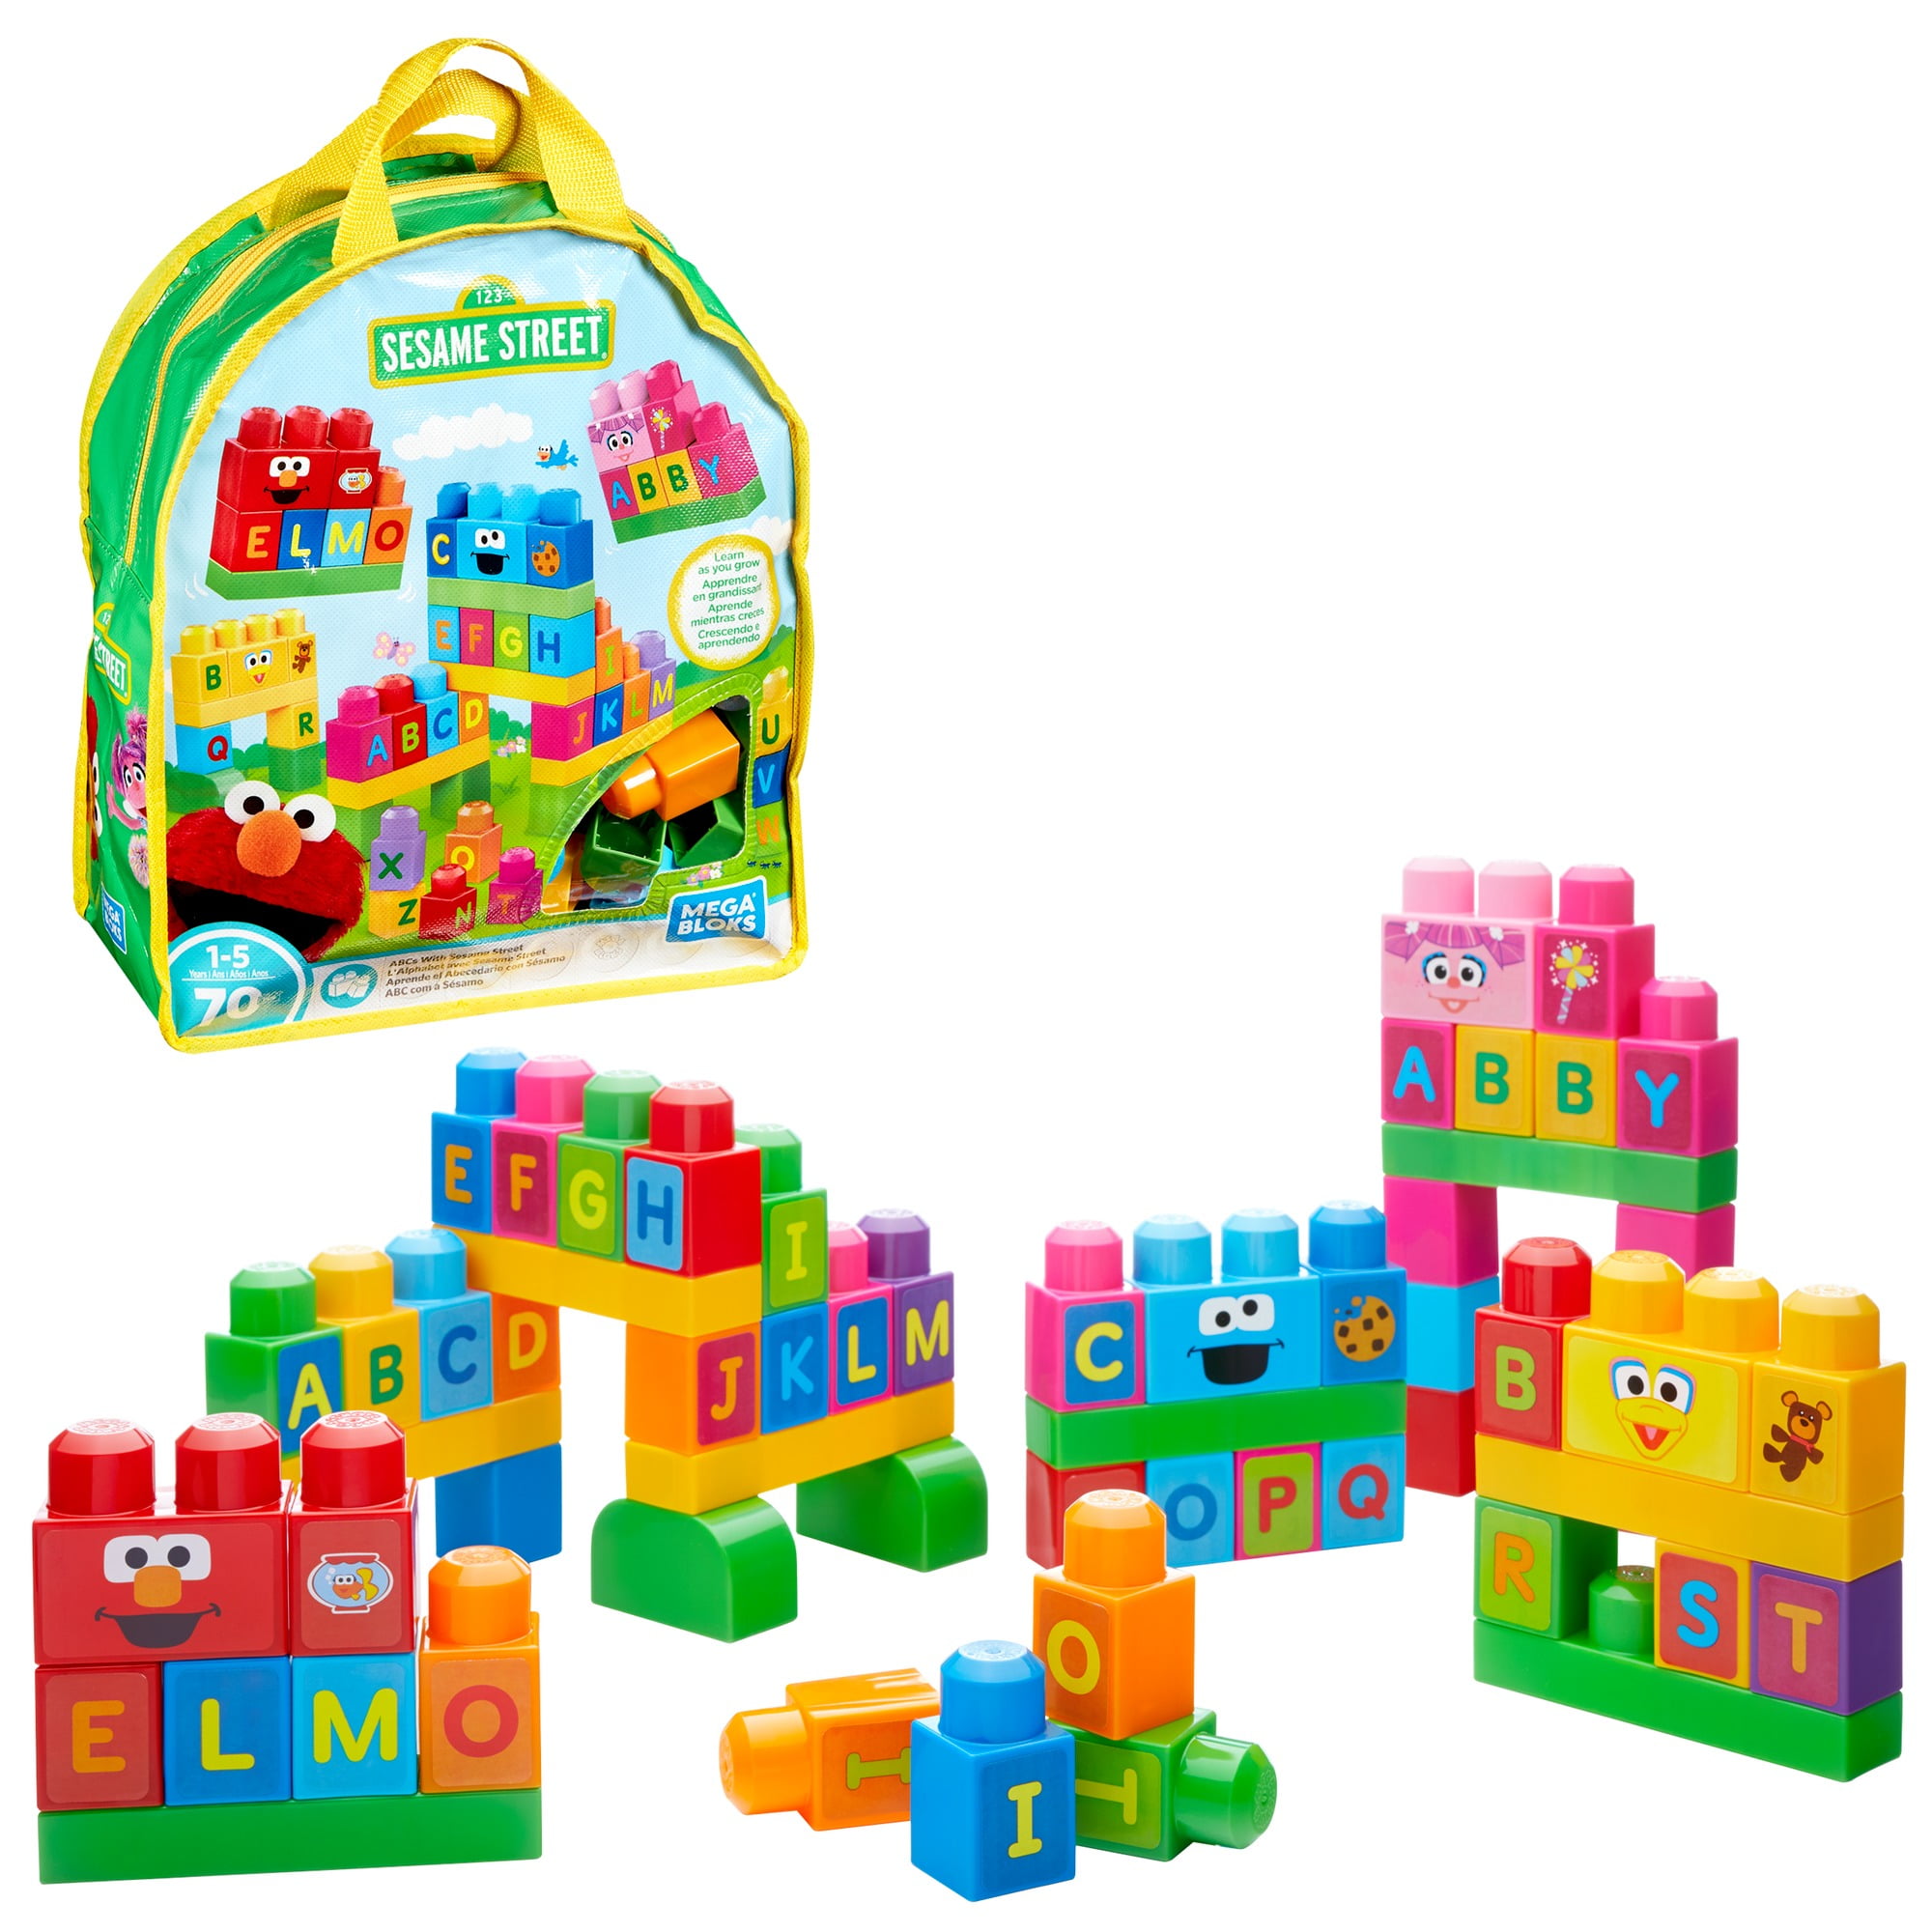 Sesame Street Building Table Toy Play Set Blocks Elmo Kids Toddler Gift Boy New 